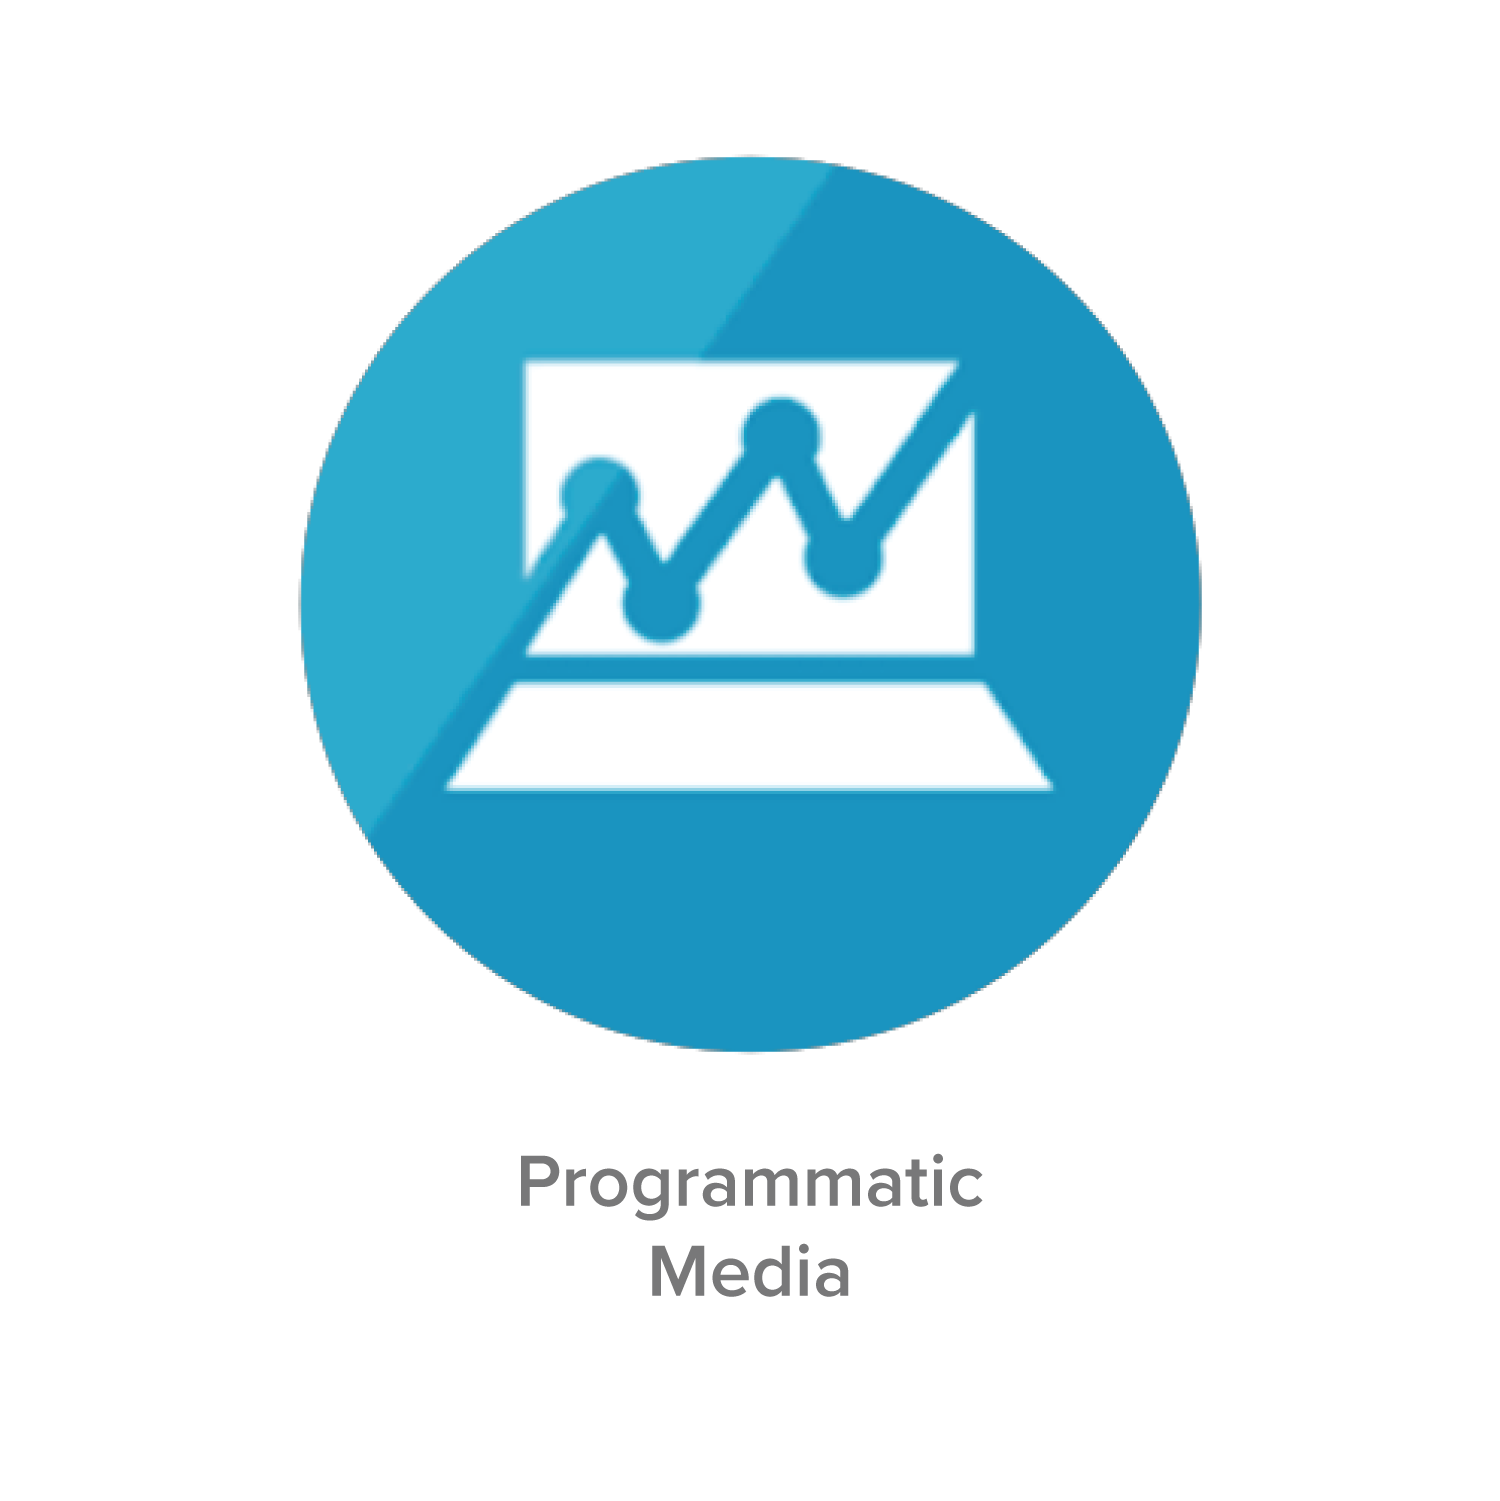 Programmatic Media graphic